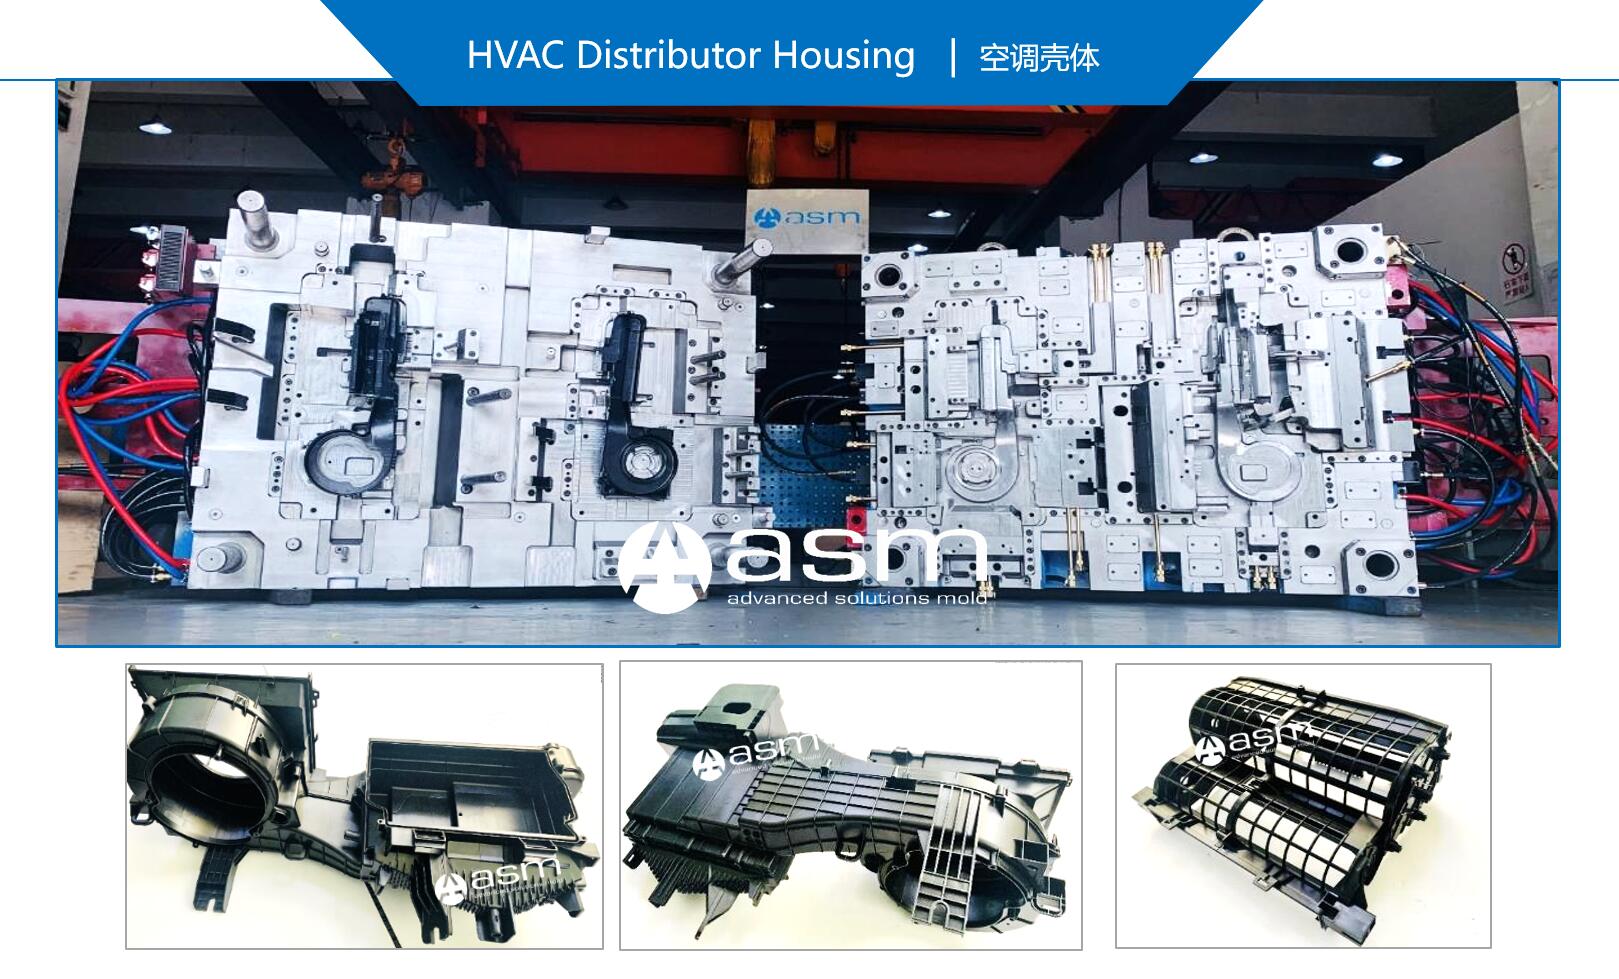 HVAC distributor housing